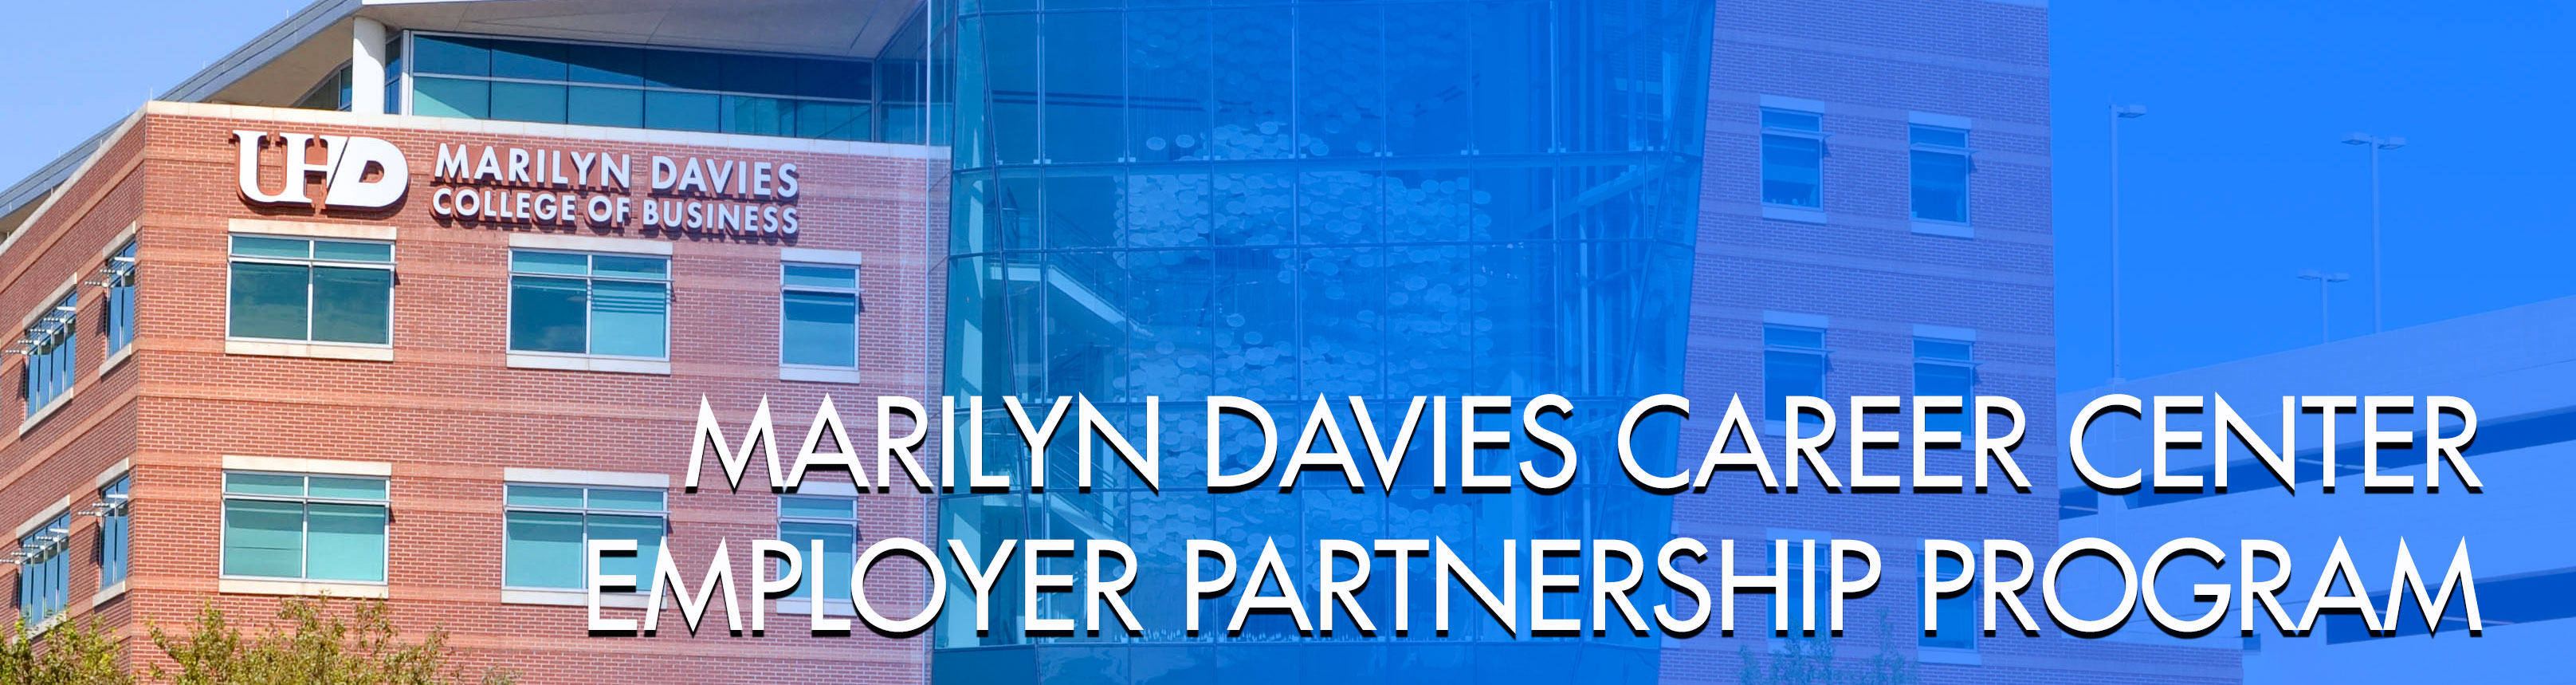 Marilyn Davies Career Center, Employer Partnership Program